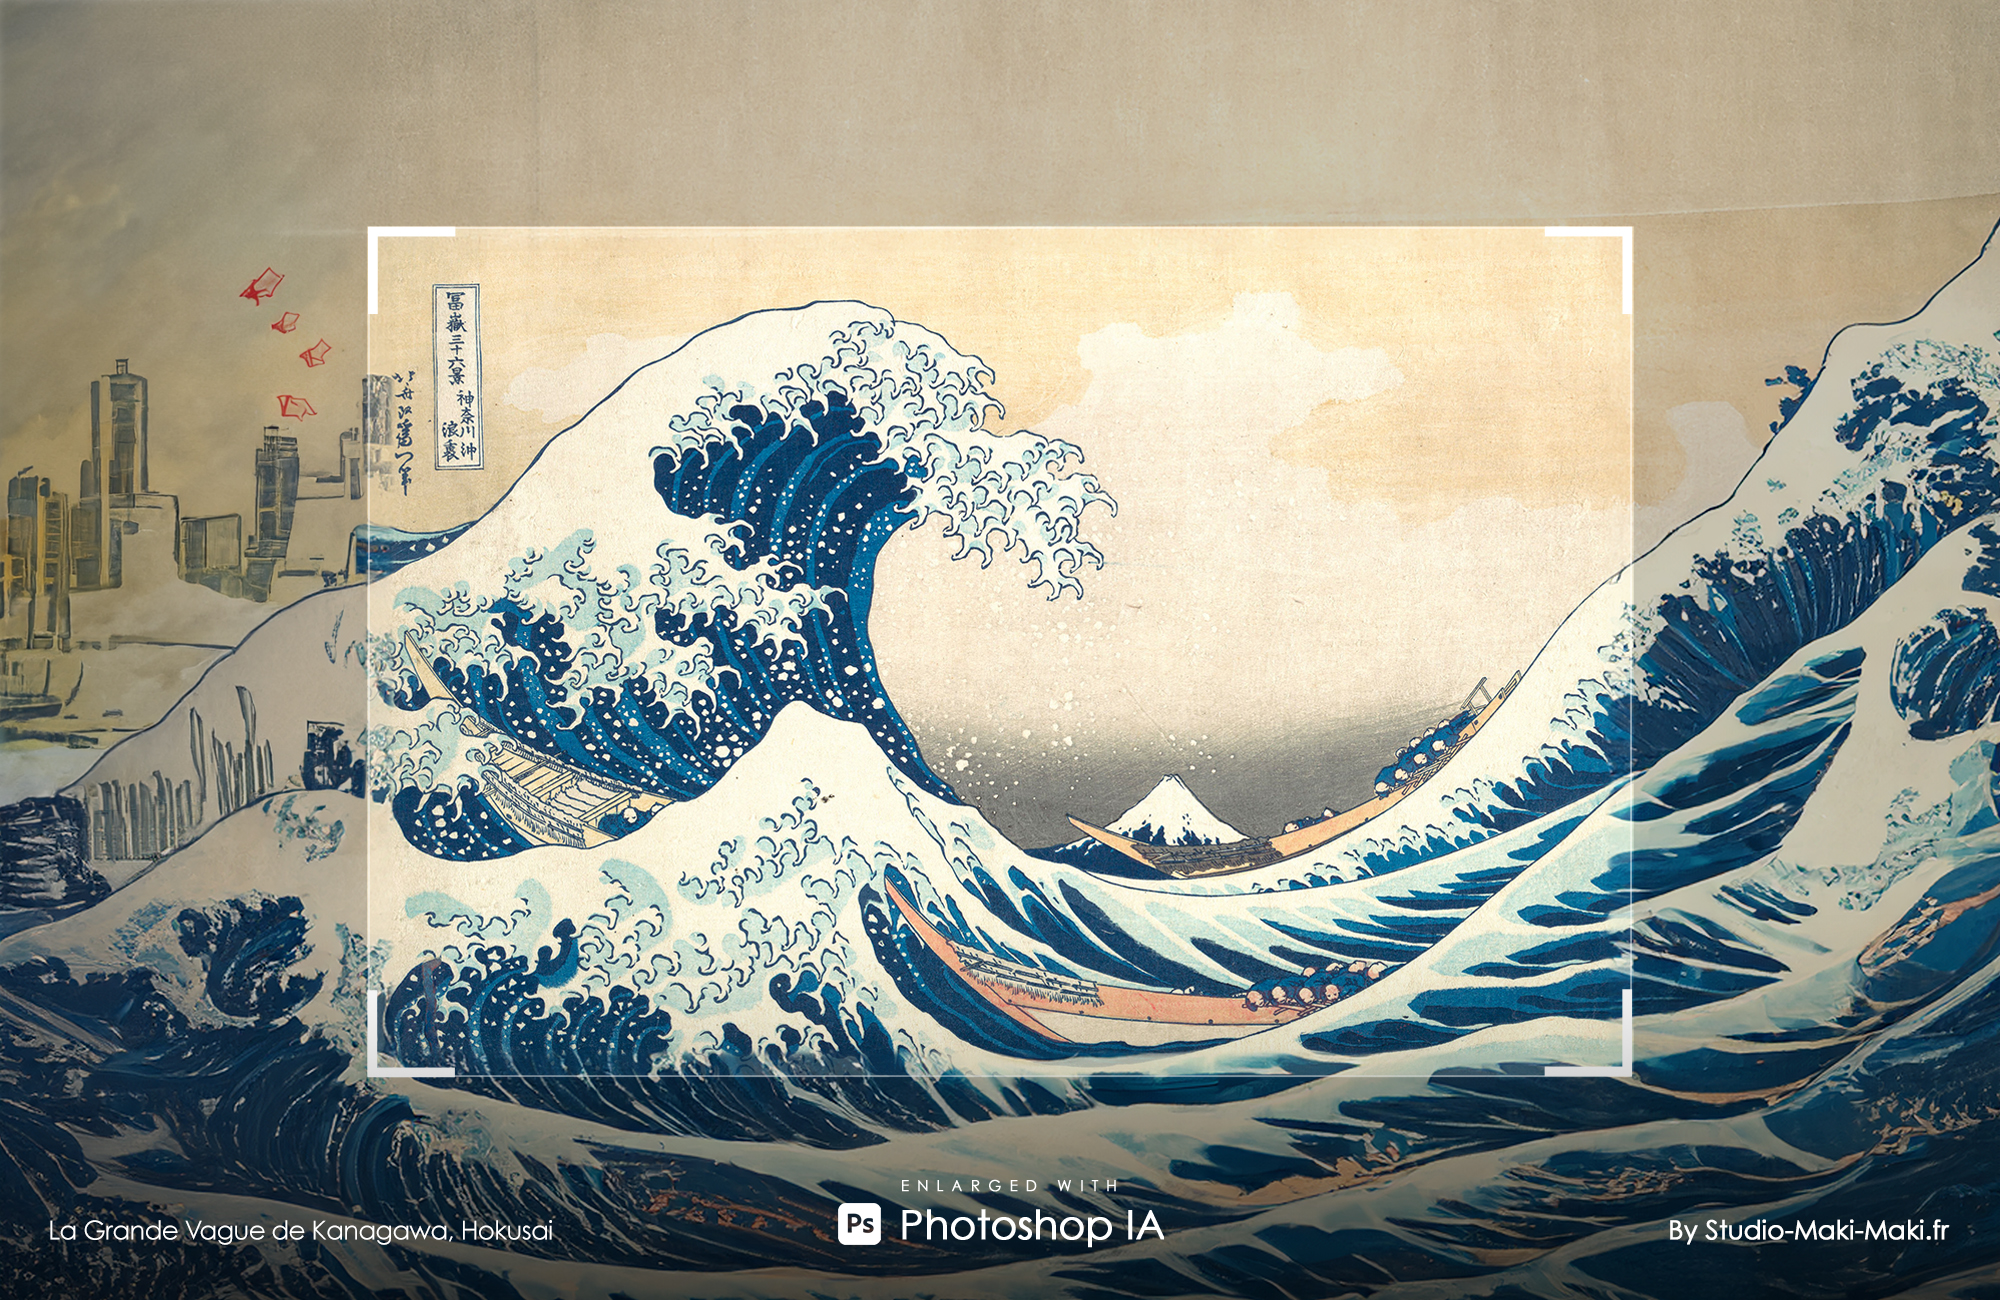 La Grande Vague de Kanagawa, Hokusai - Enlarged with Photoshop IA - By Studio Maki Maki